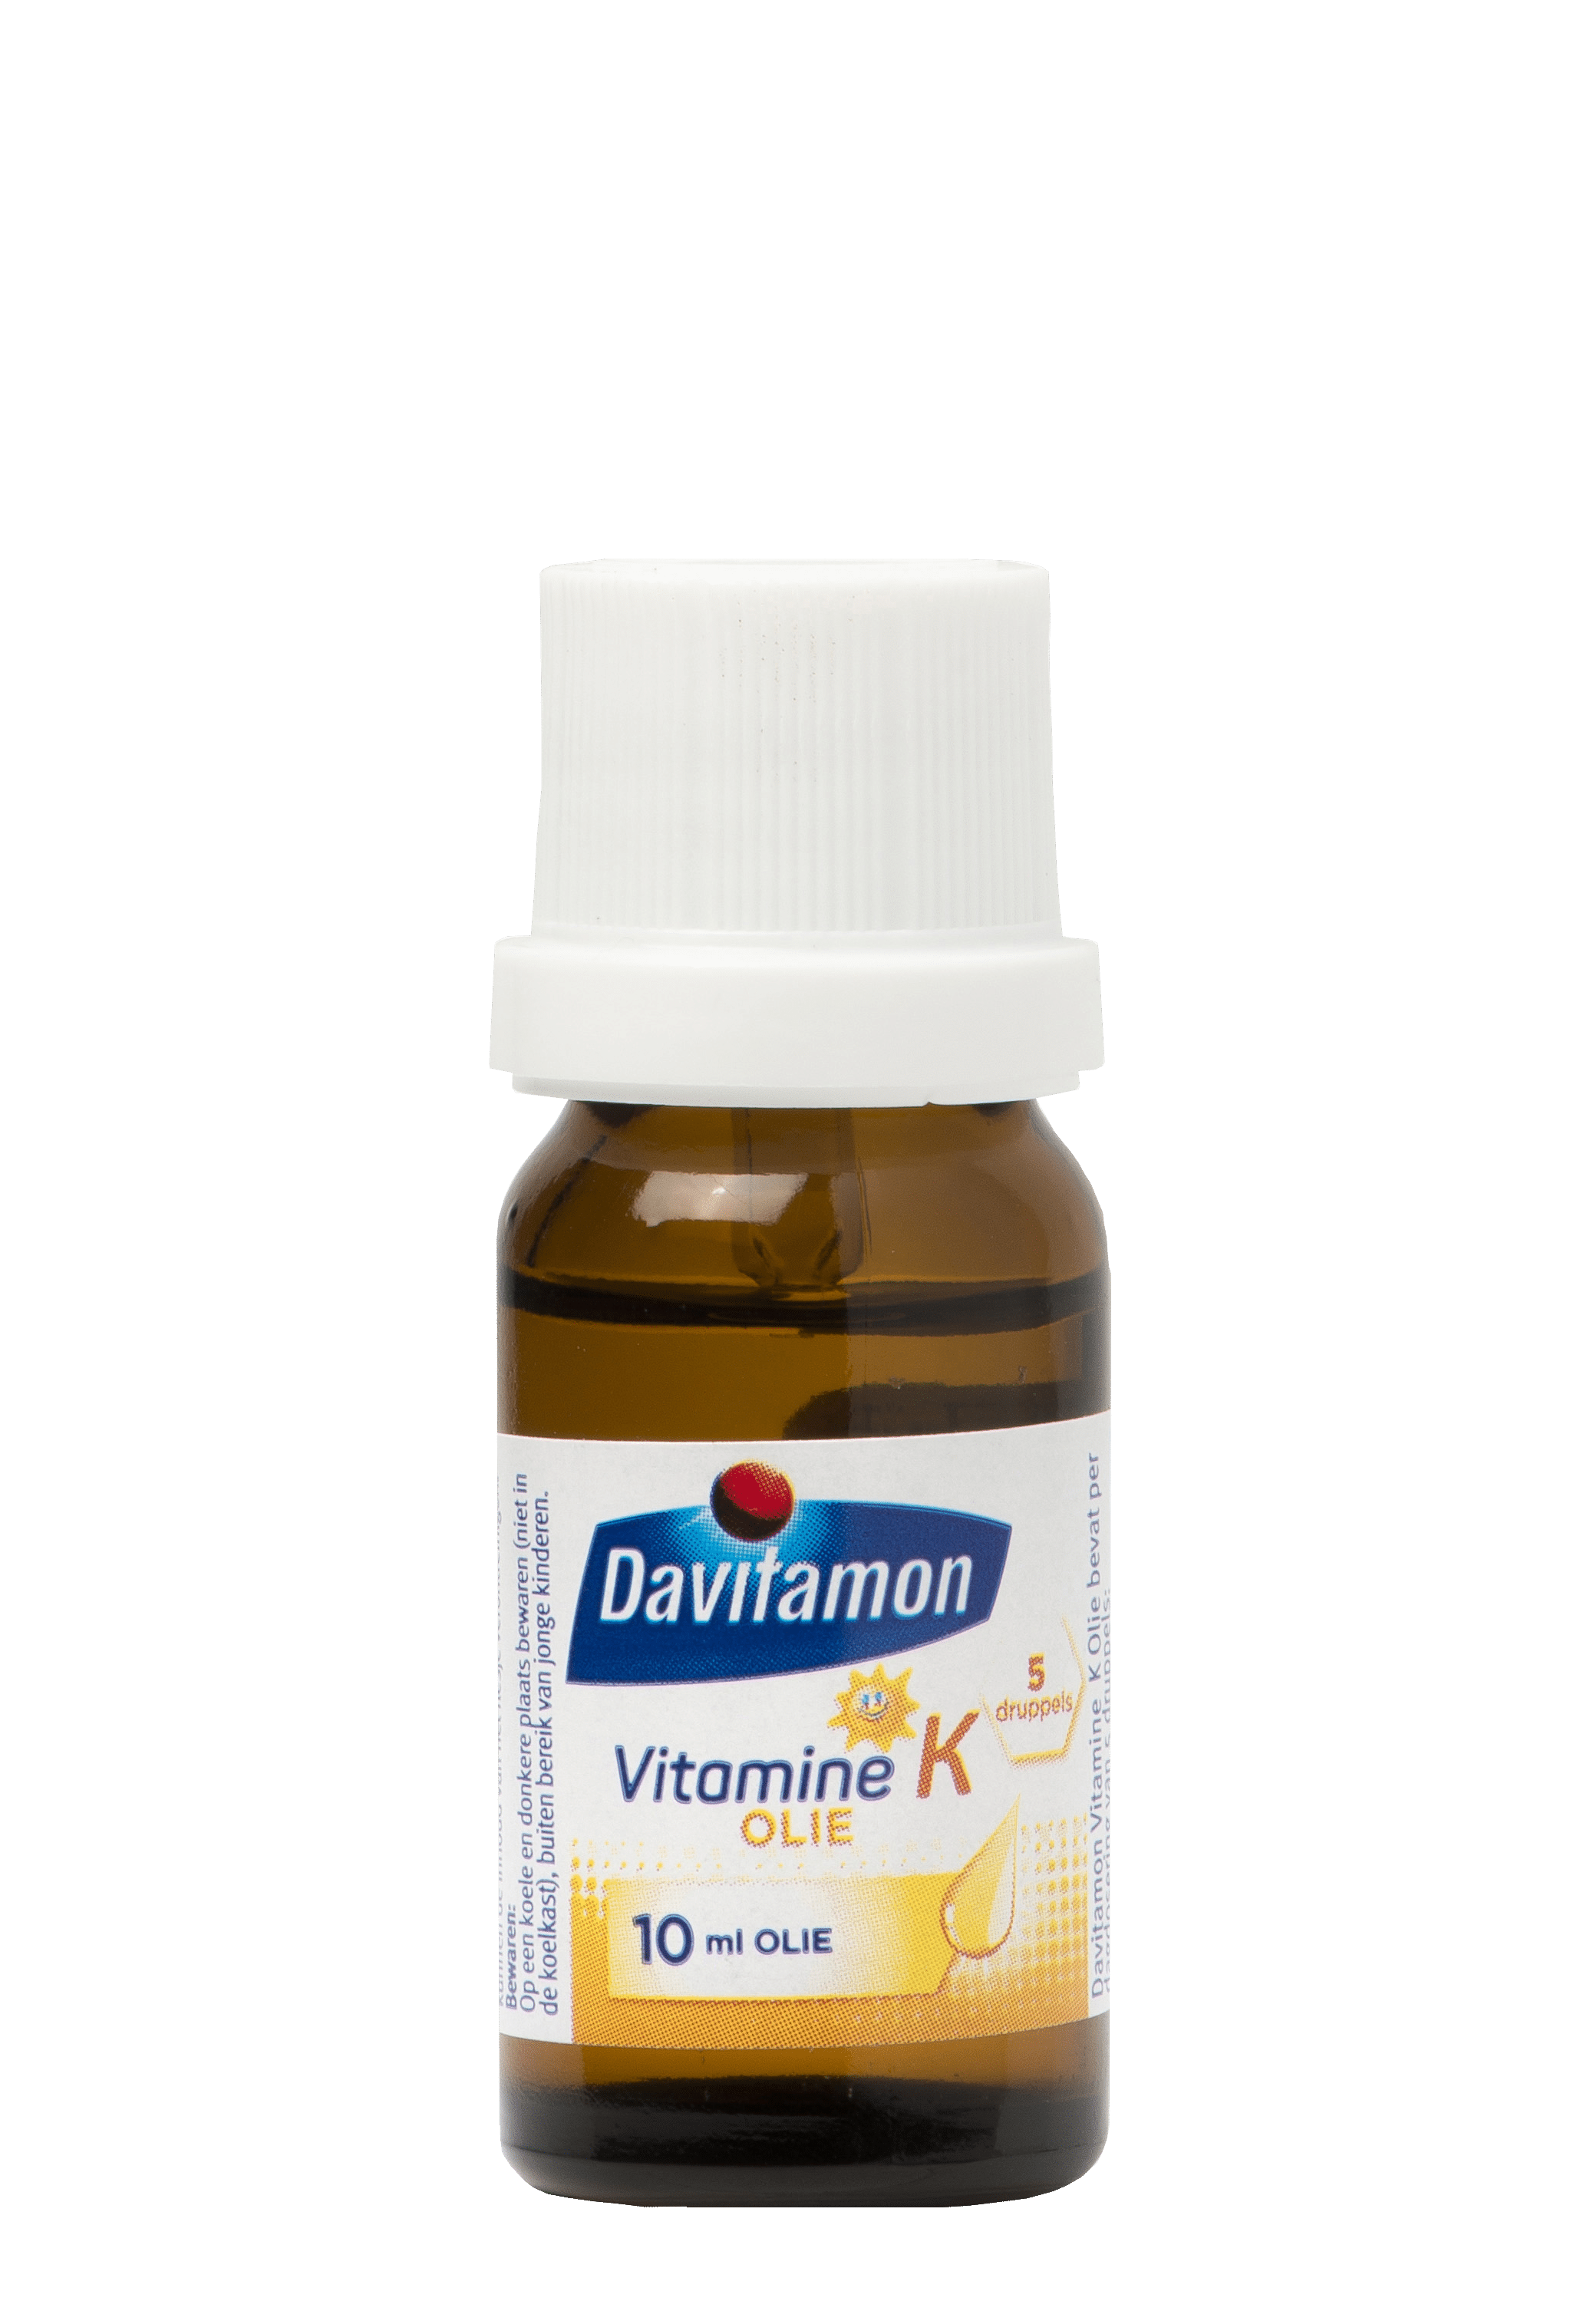 Davitamon Vitamine K Olie Product